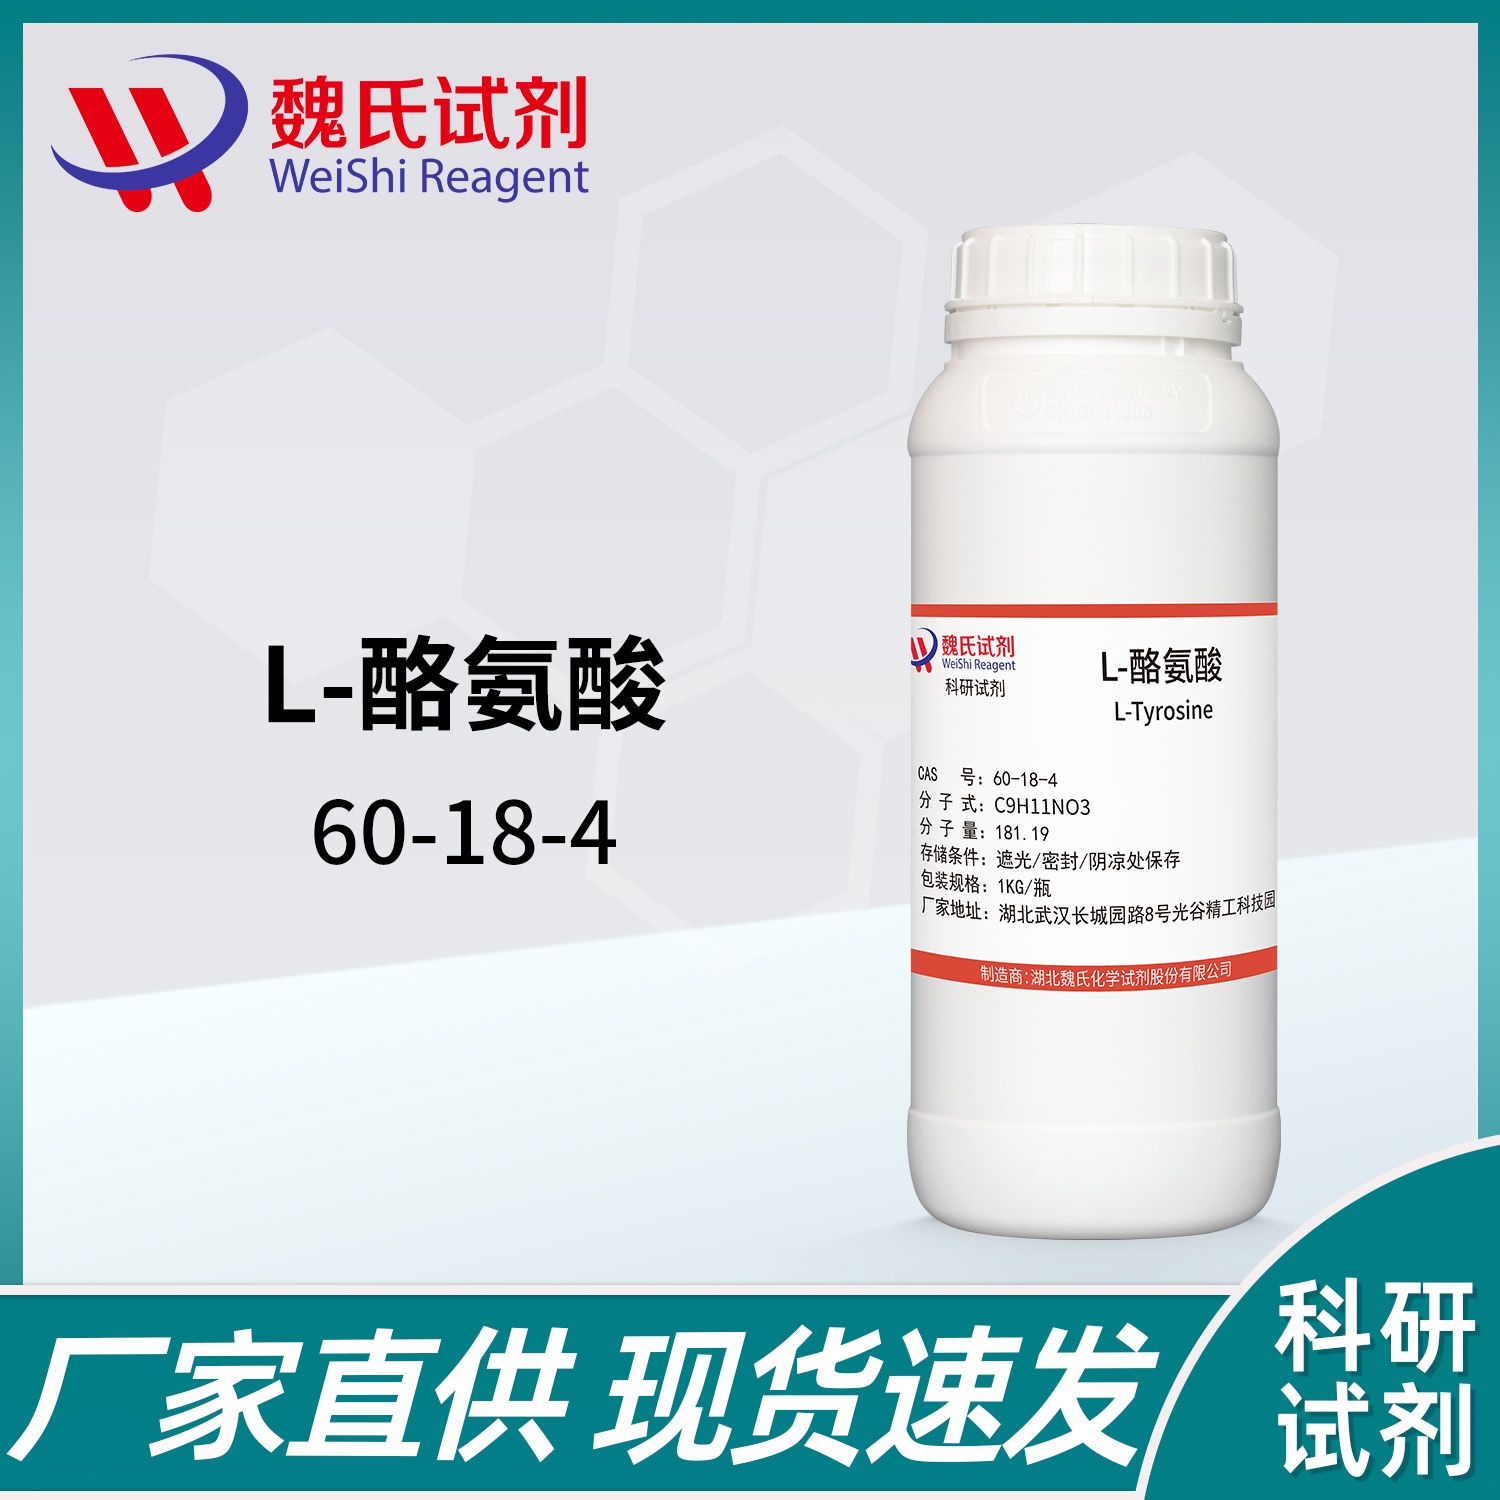 L-酪氨酸—60-18-4